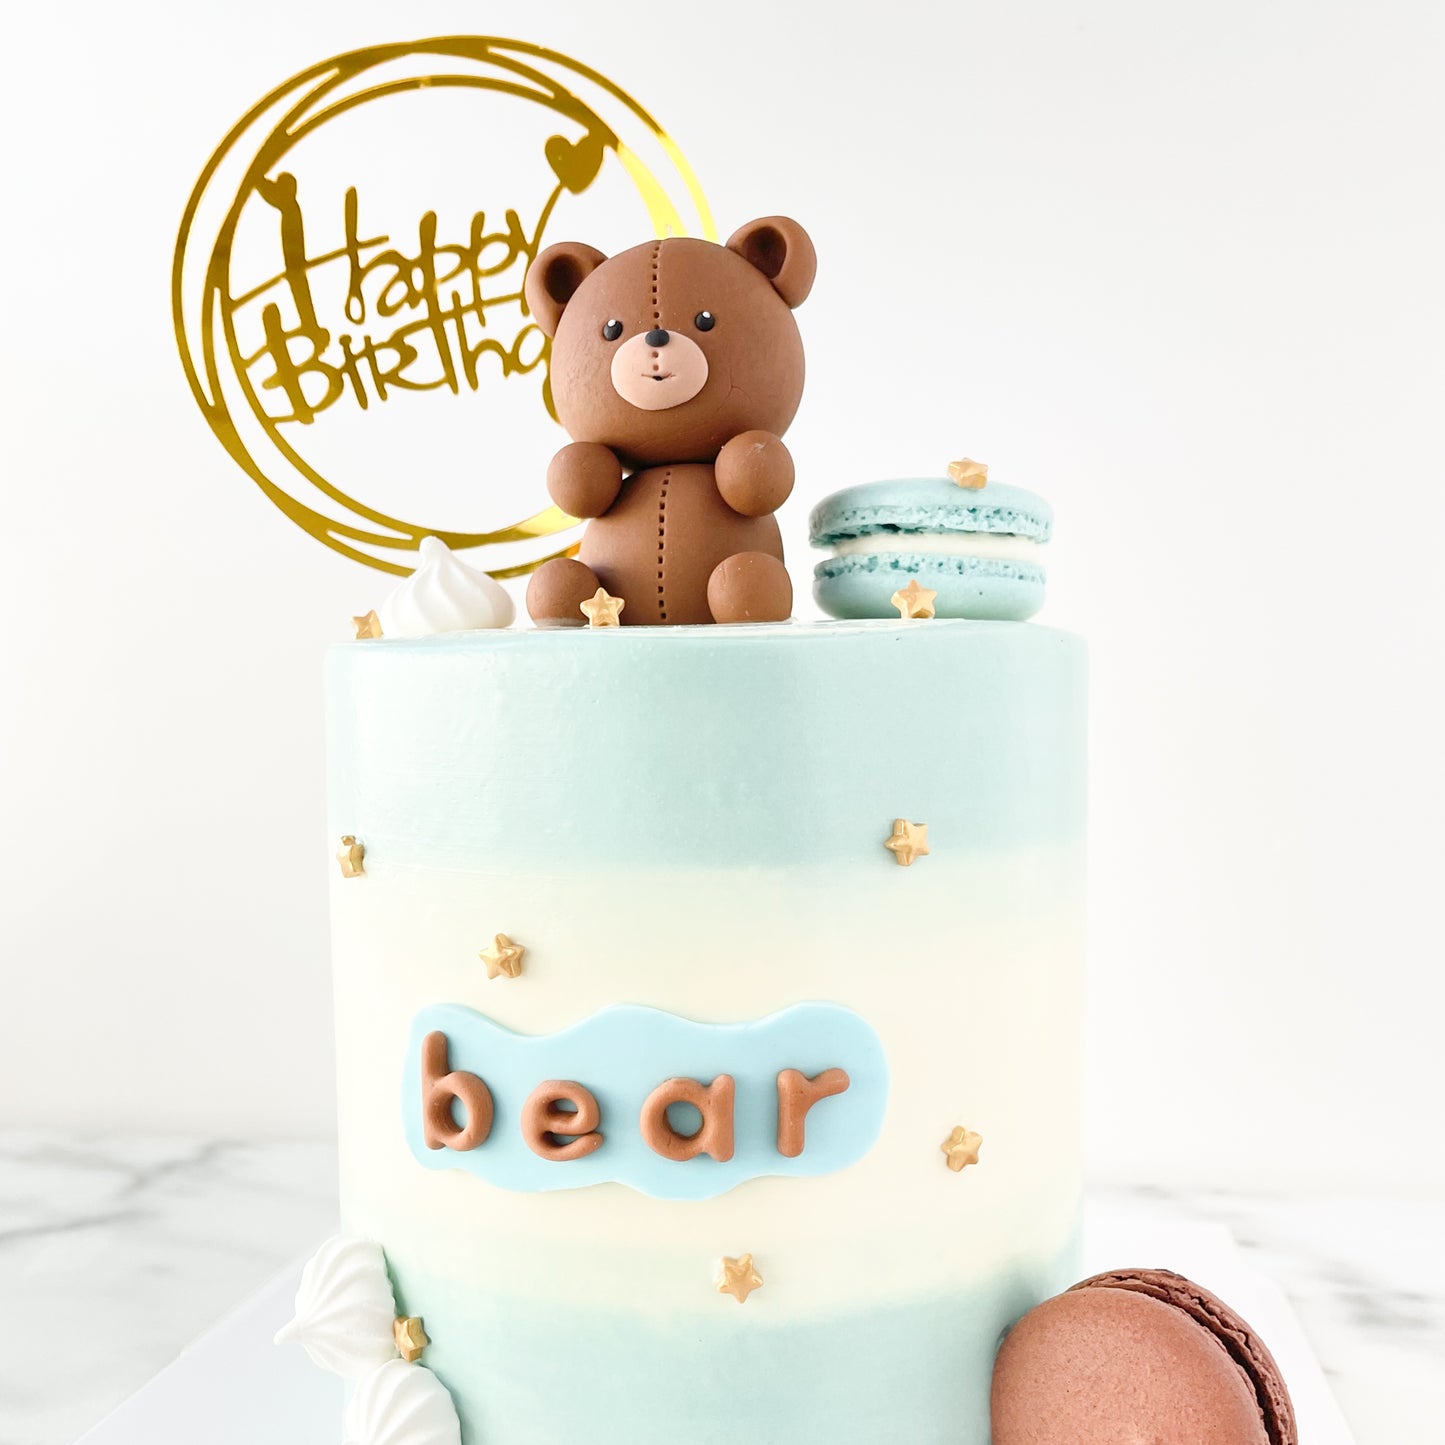 Customized Cake-Teddy Bear cake with macaron